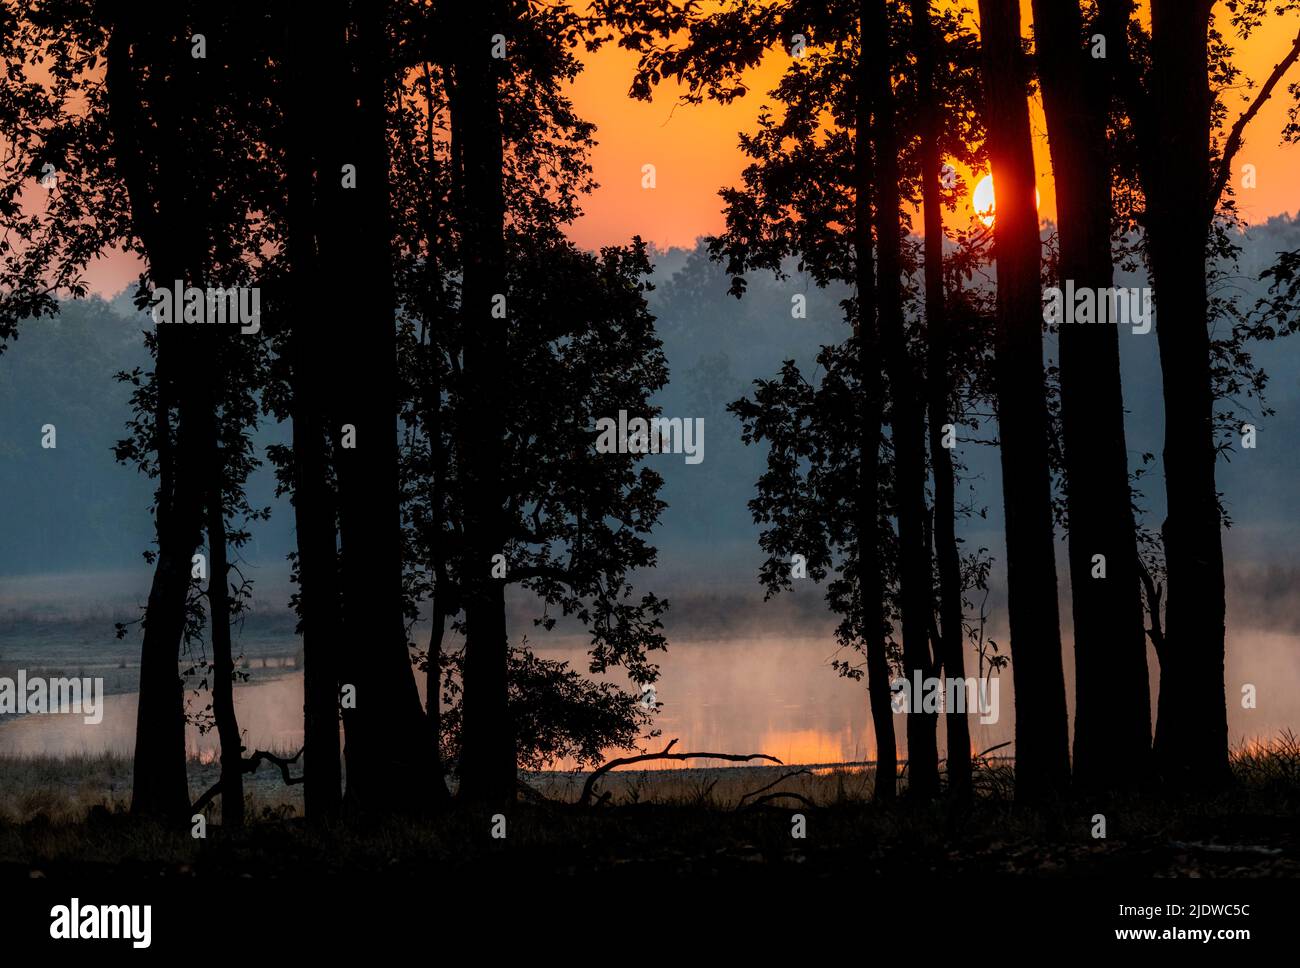 Sunrise through the forest of Shala trees (Shorea robusta) in Kanha National Park, Madhya Pradesh, India. Stock Photo